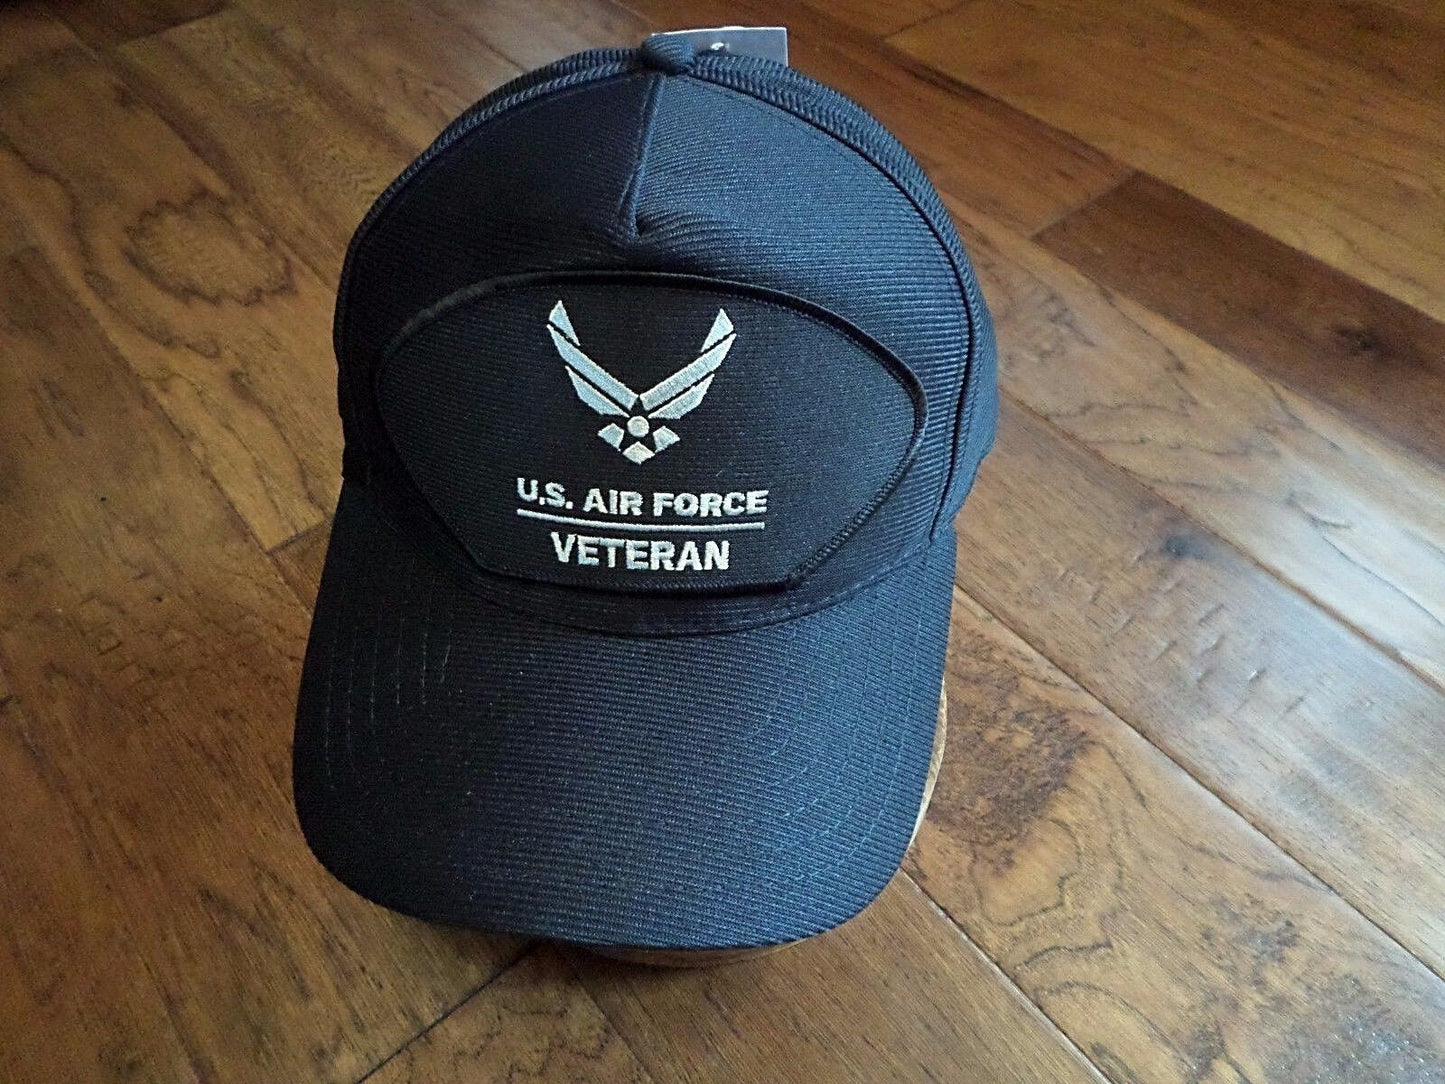 U.S AIR FORCE VETERAN HAT OFFICIAL U.S MILITARY BALL CAP U.S.A MADE A.F LOGO